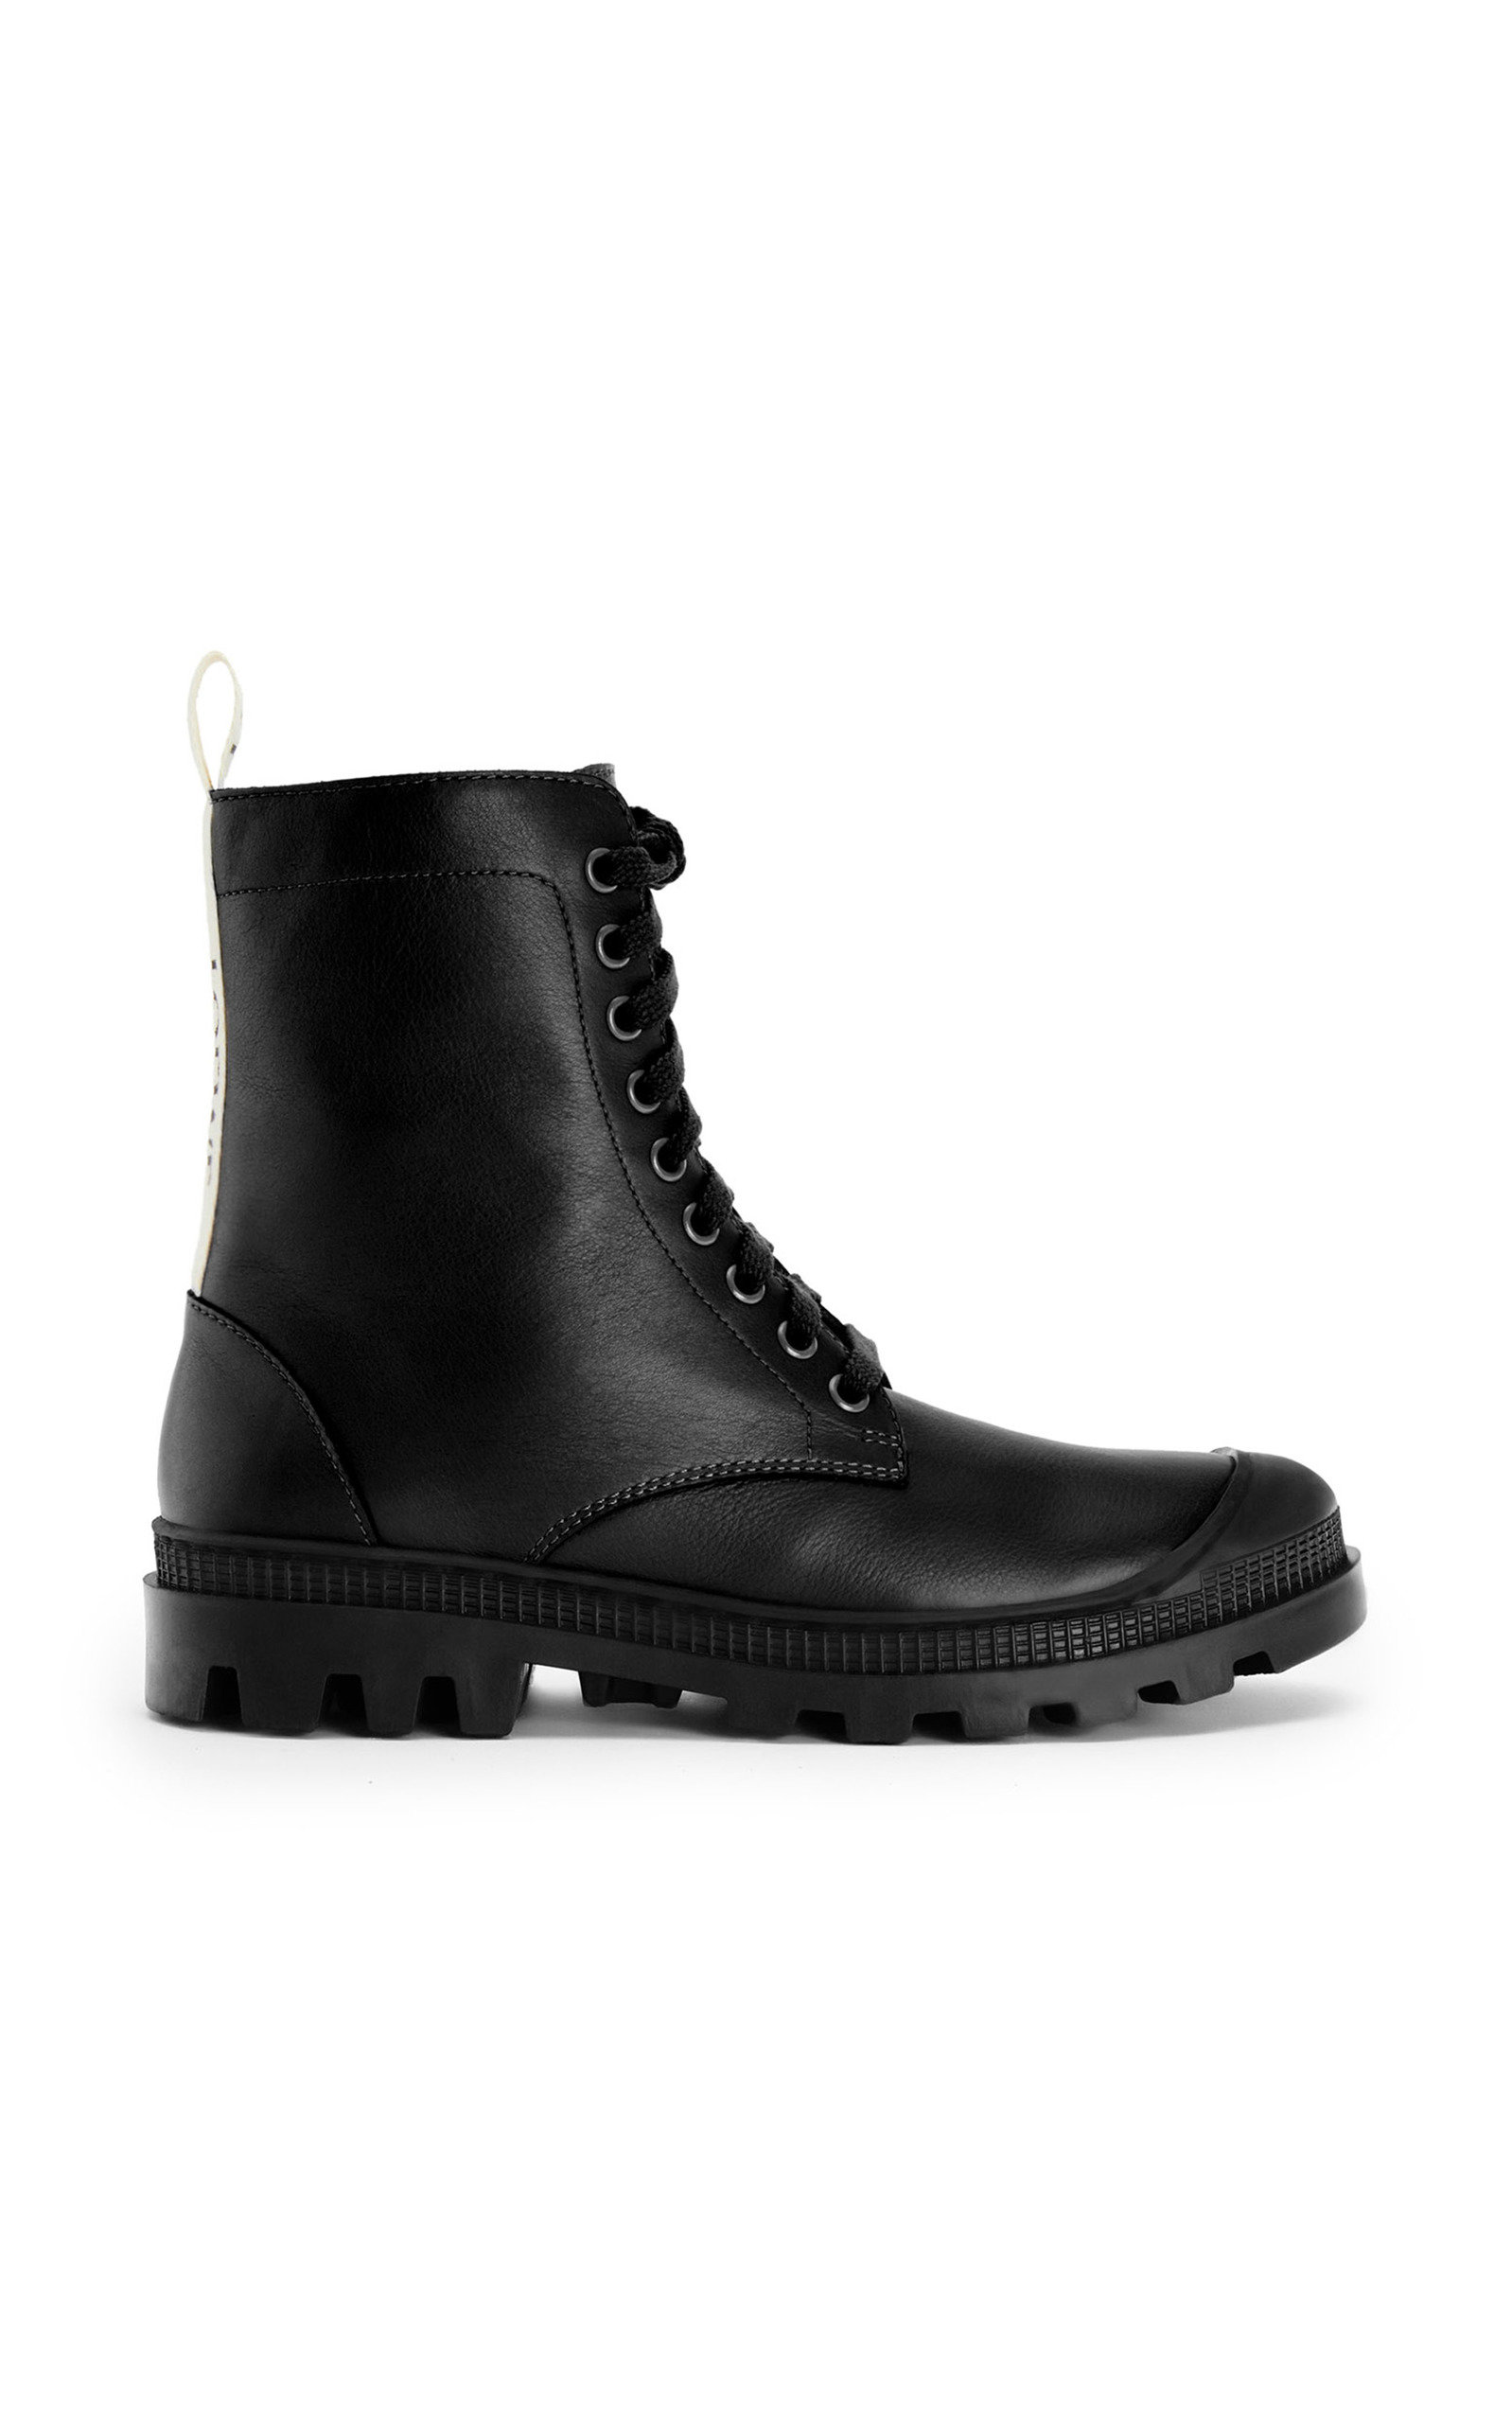 Loewe - Women's Leather Combat Boots - Black - IT 35 - Moda Operandi